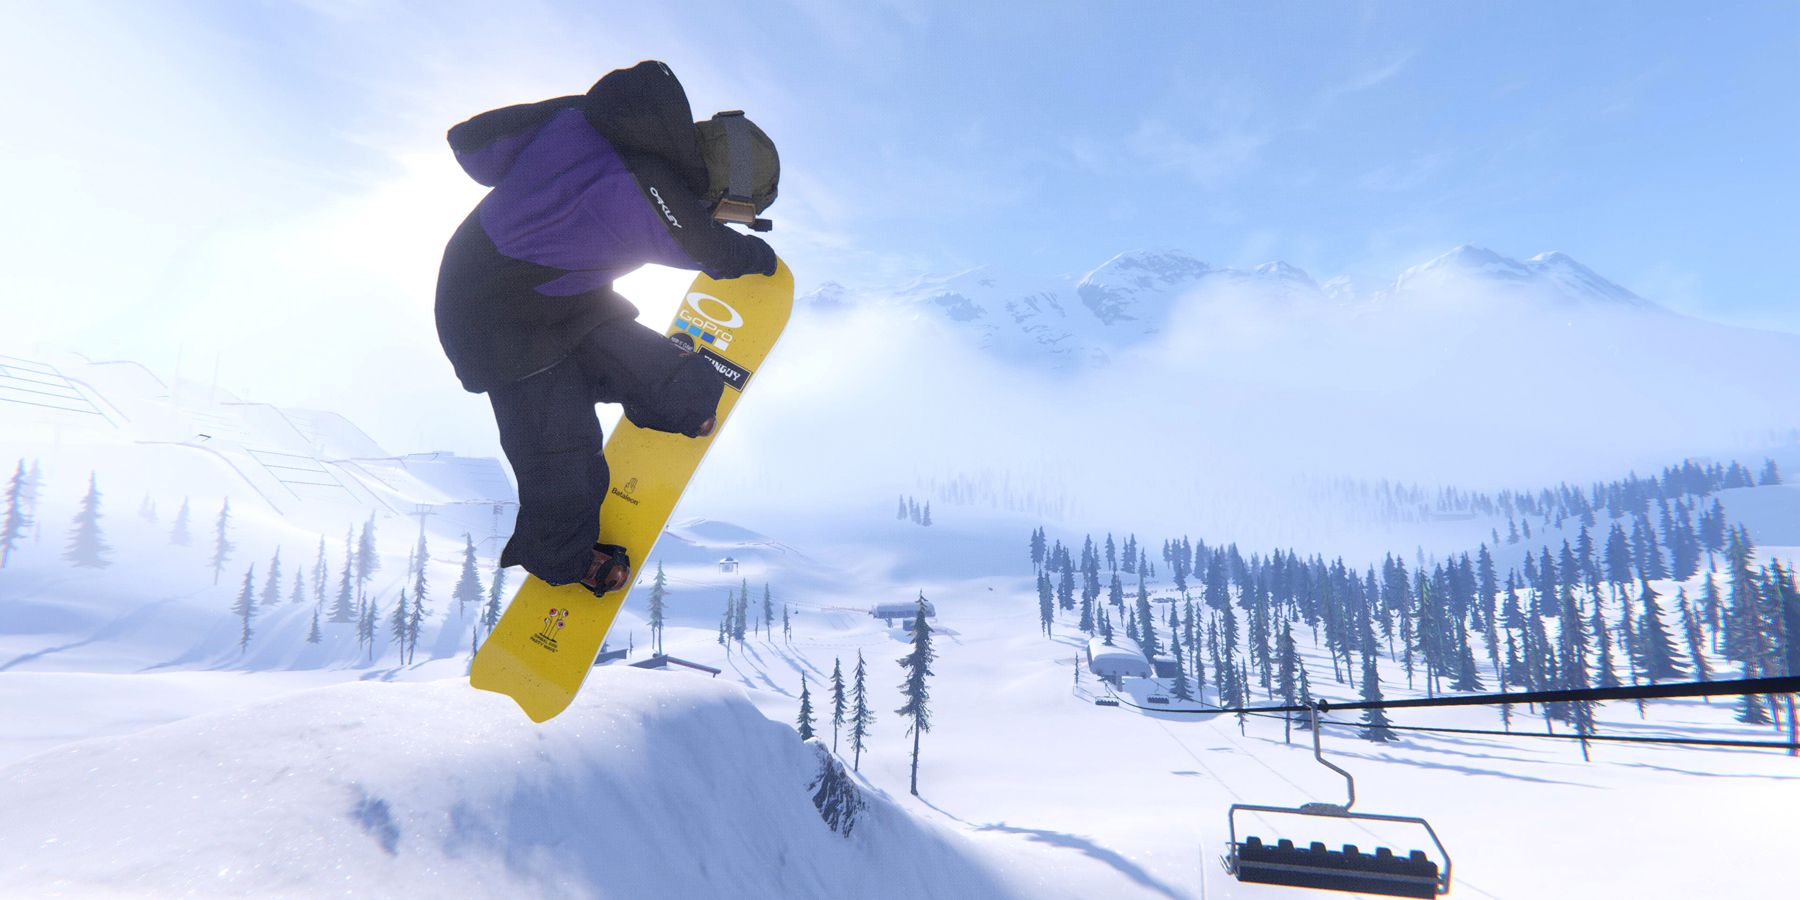 Shredders snowboard jump